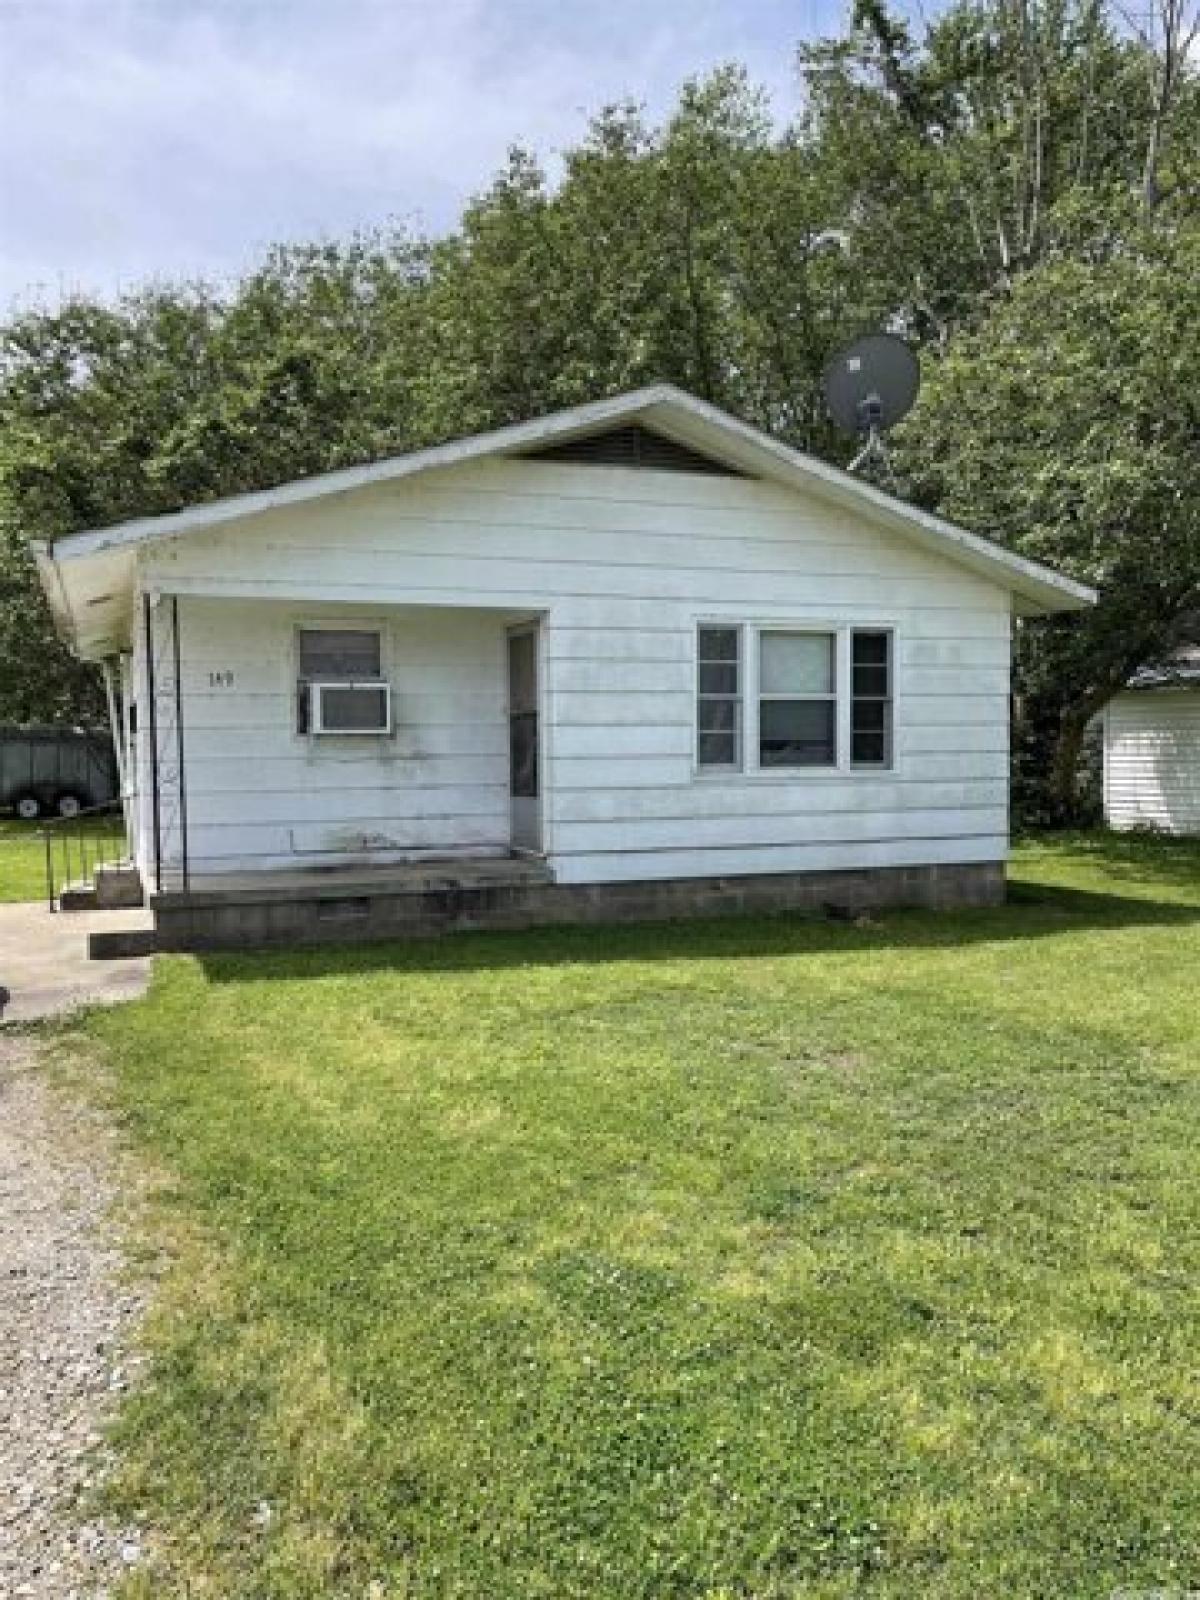 Picture of Home For Sale in Piggott, Arkansas, United States